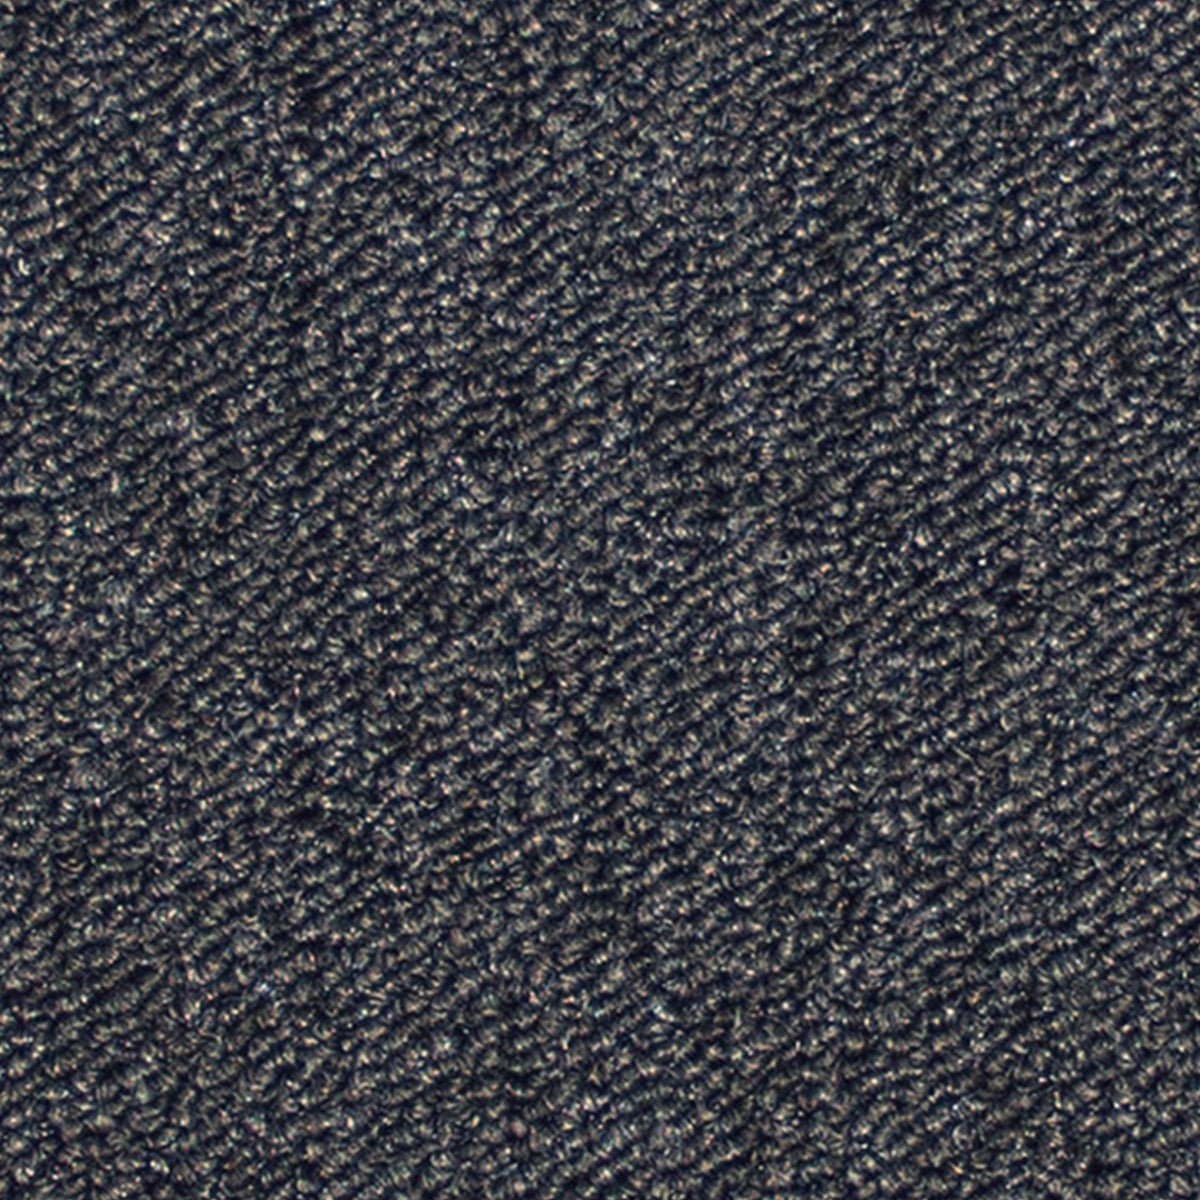 20 x Carpet Tiles 5m2 / Charcoal Black